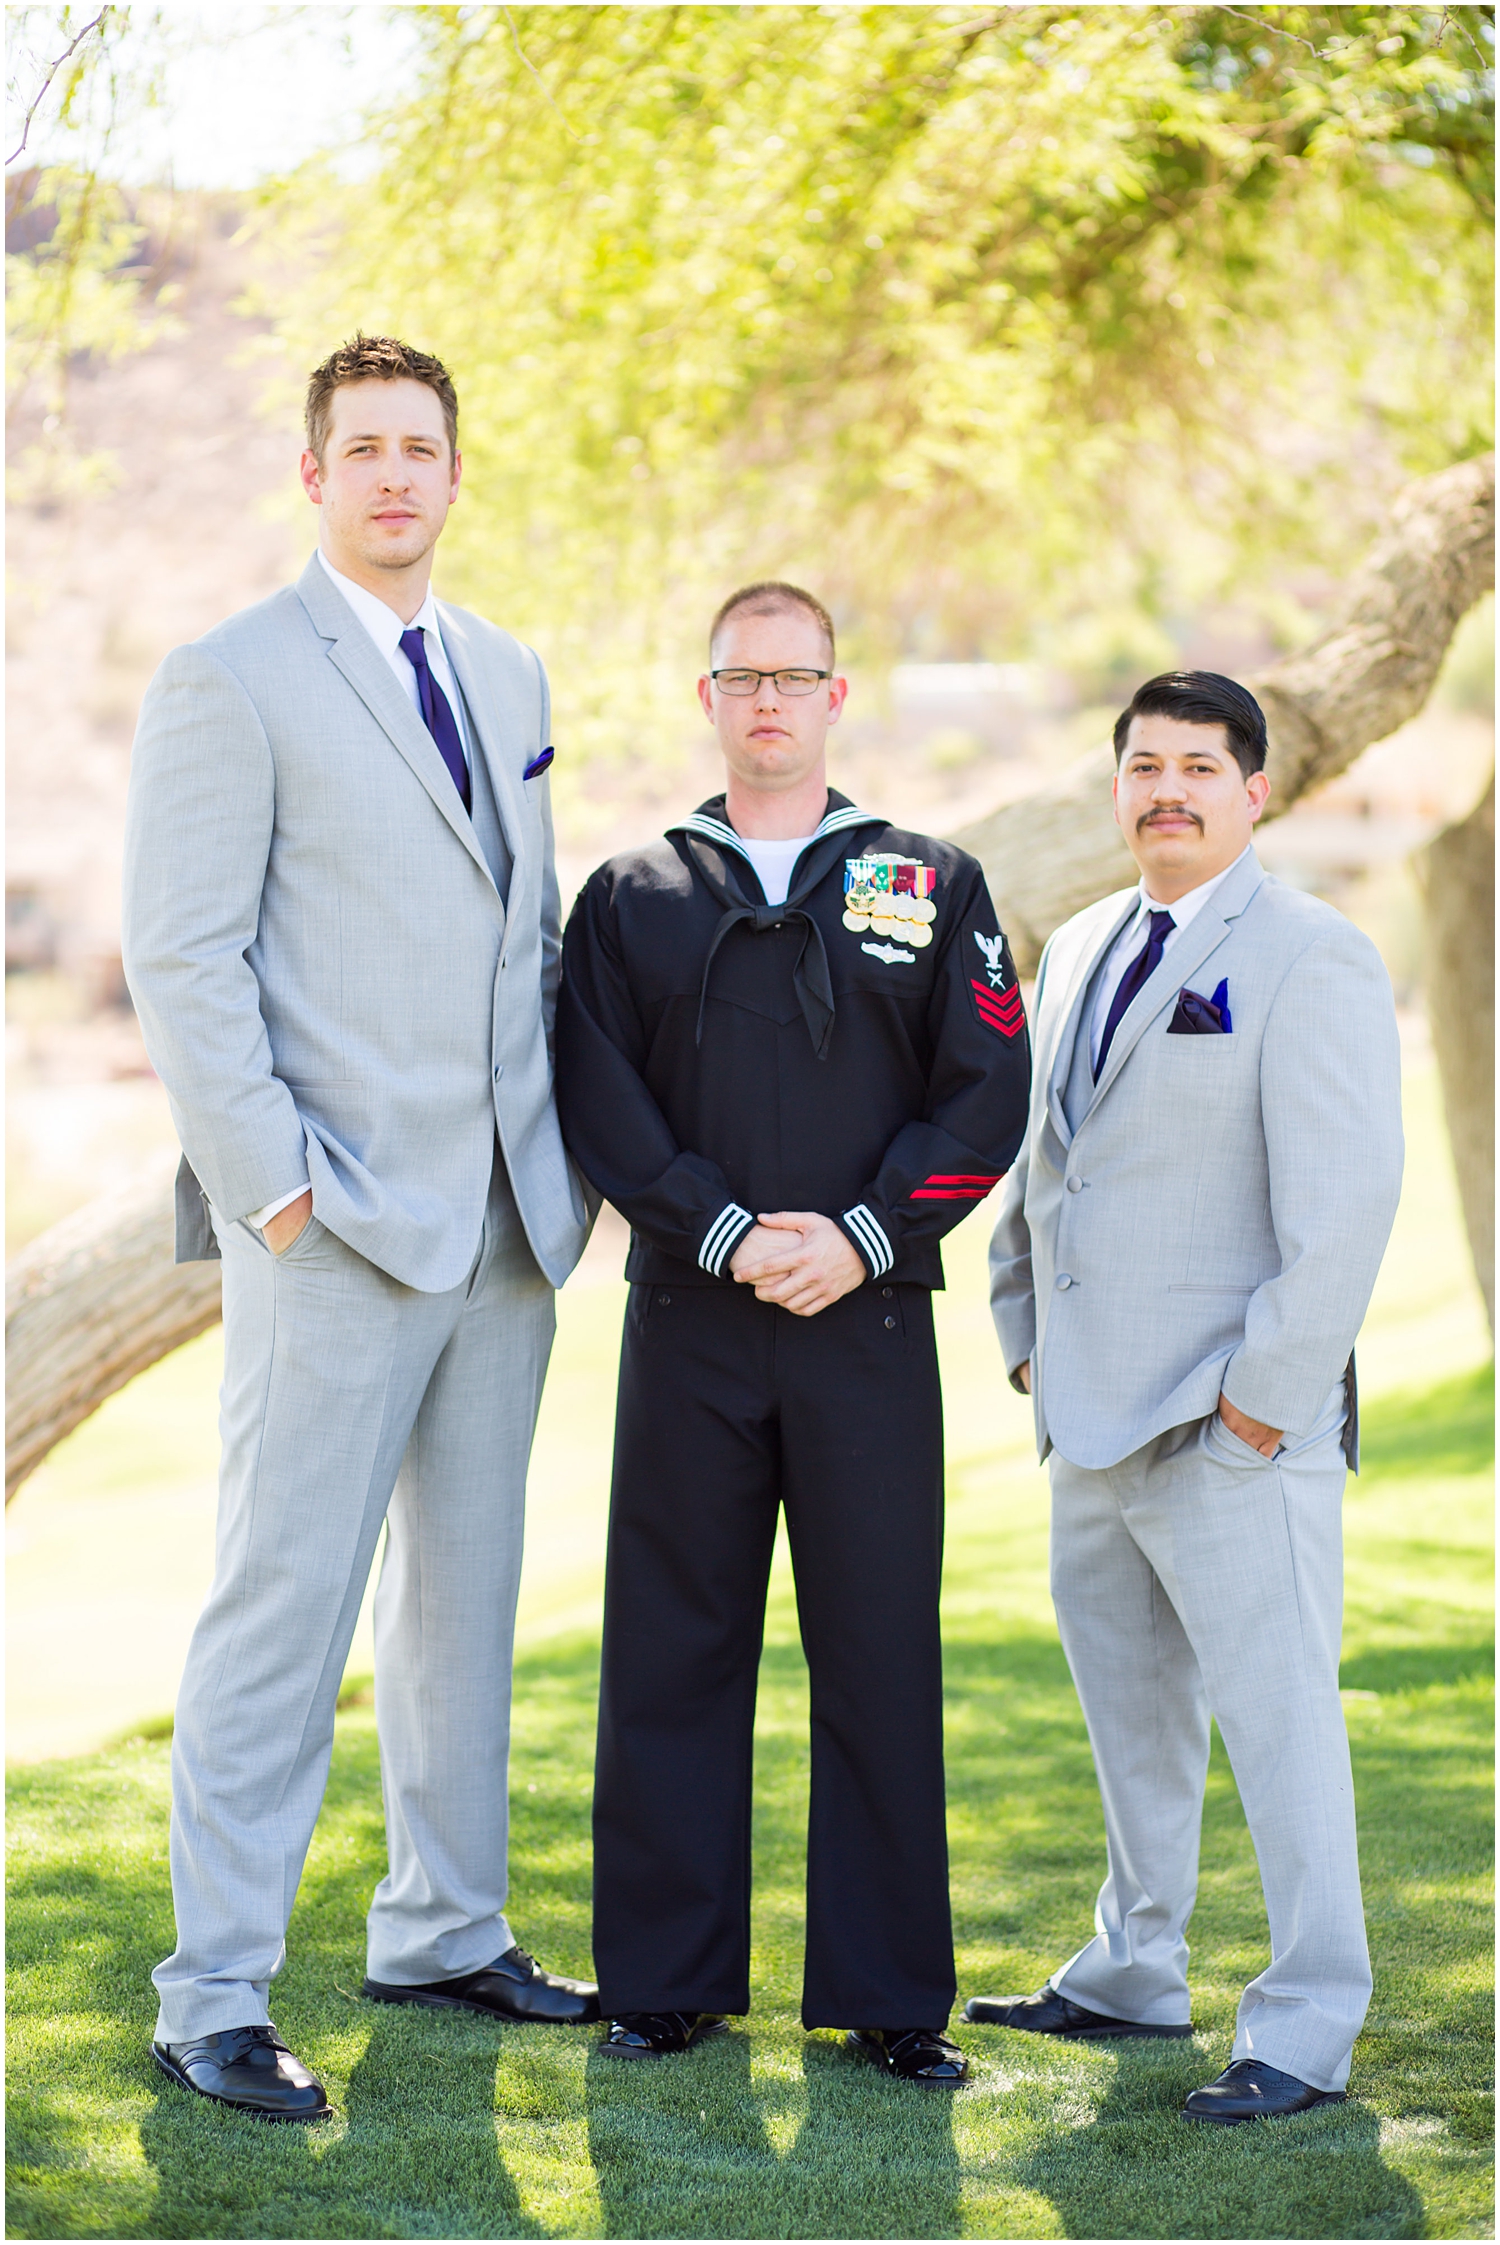 Groom in Navy dress uniform with groomsmen in light grey suits and purple tie on wedding day 